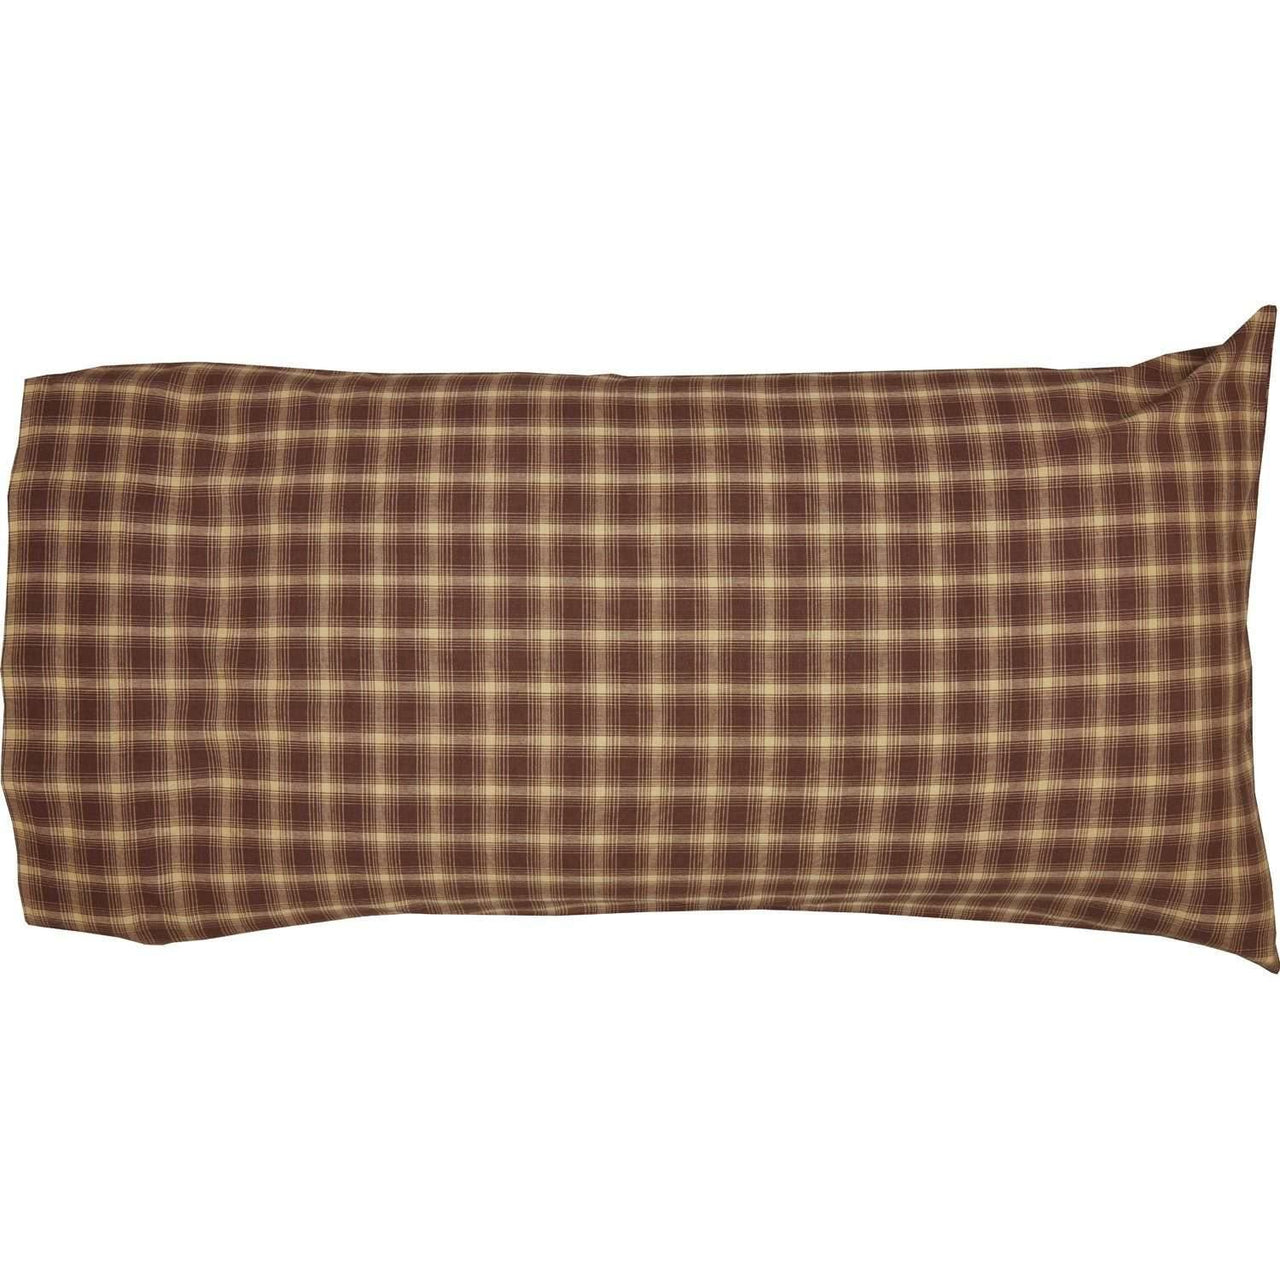 Dawson Star King Pillow Case Set of 2 21x40 VHC Brands - The Fox Decor